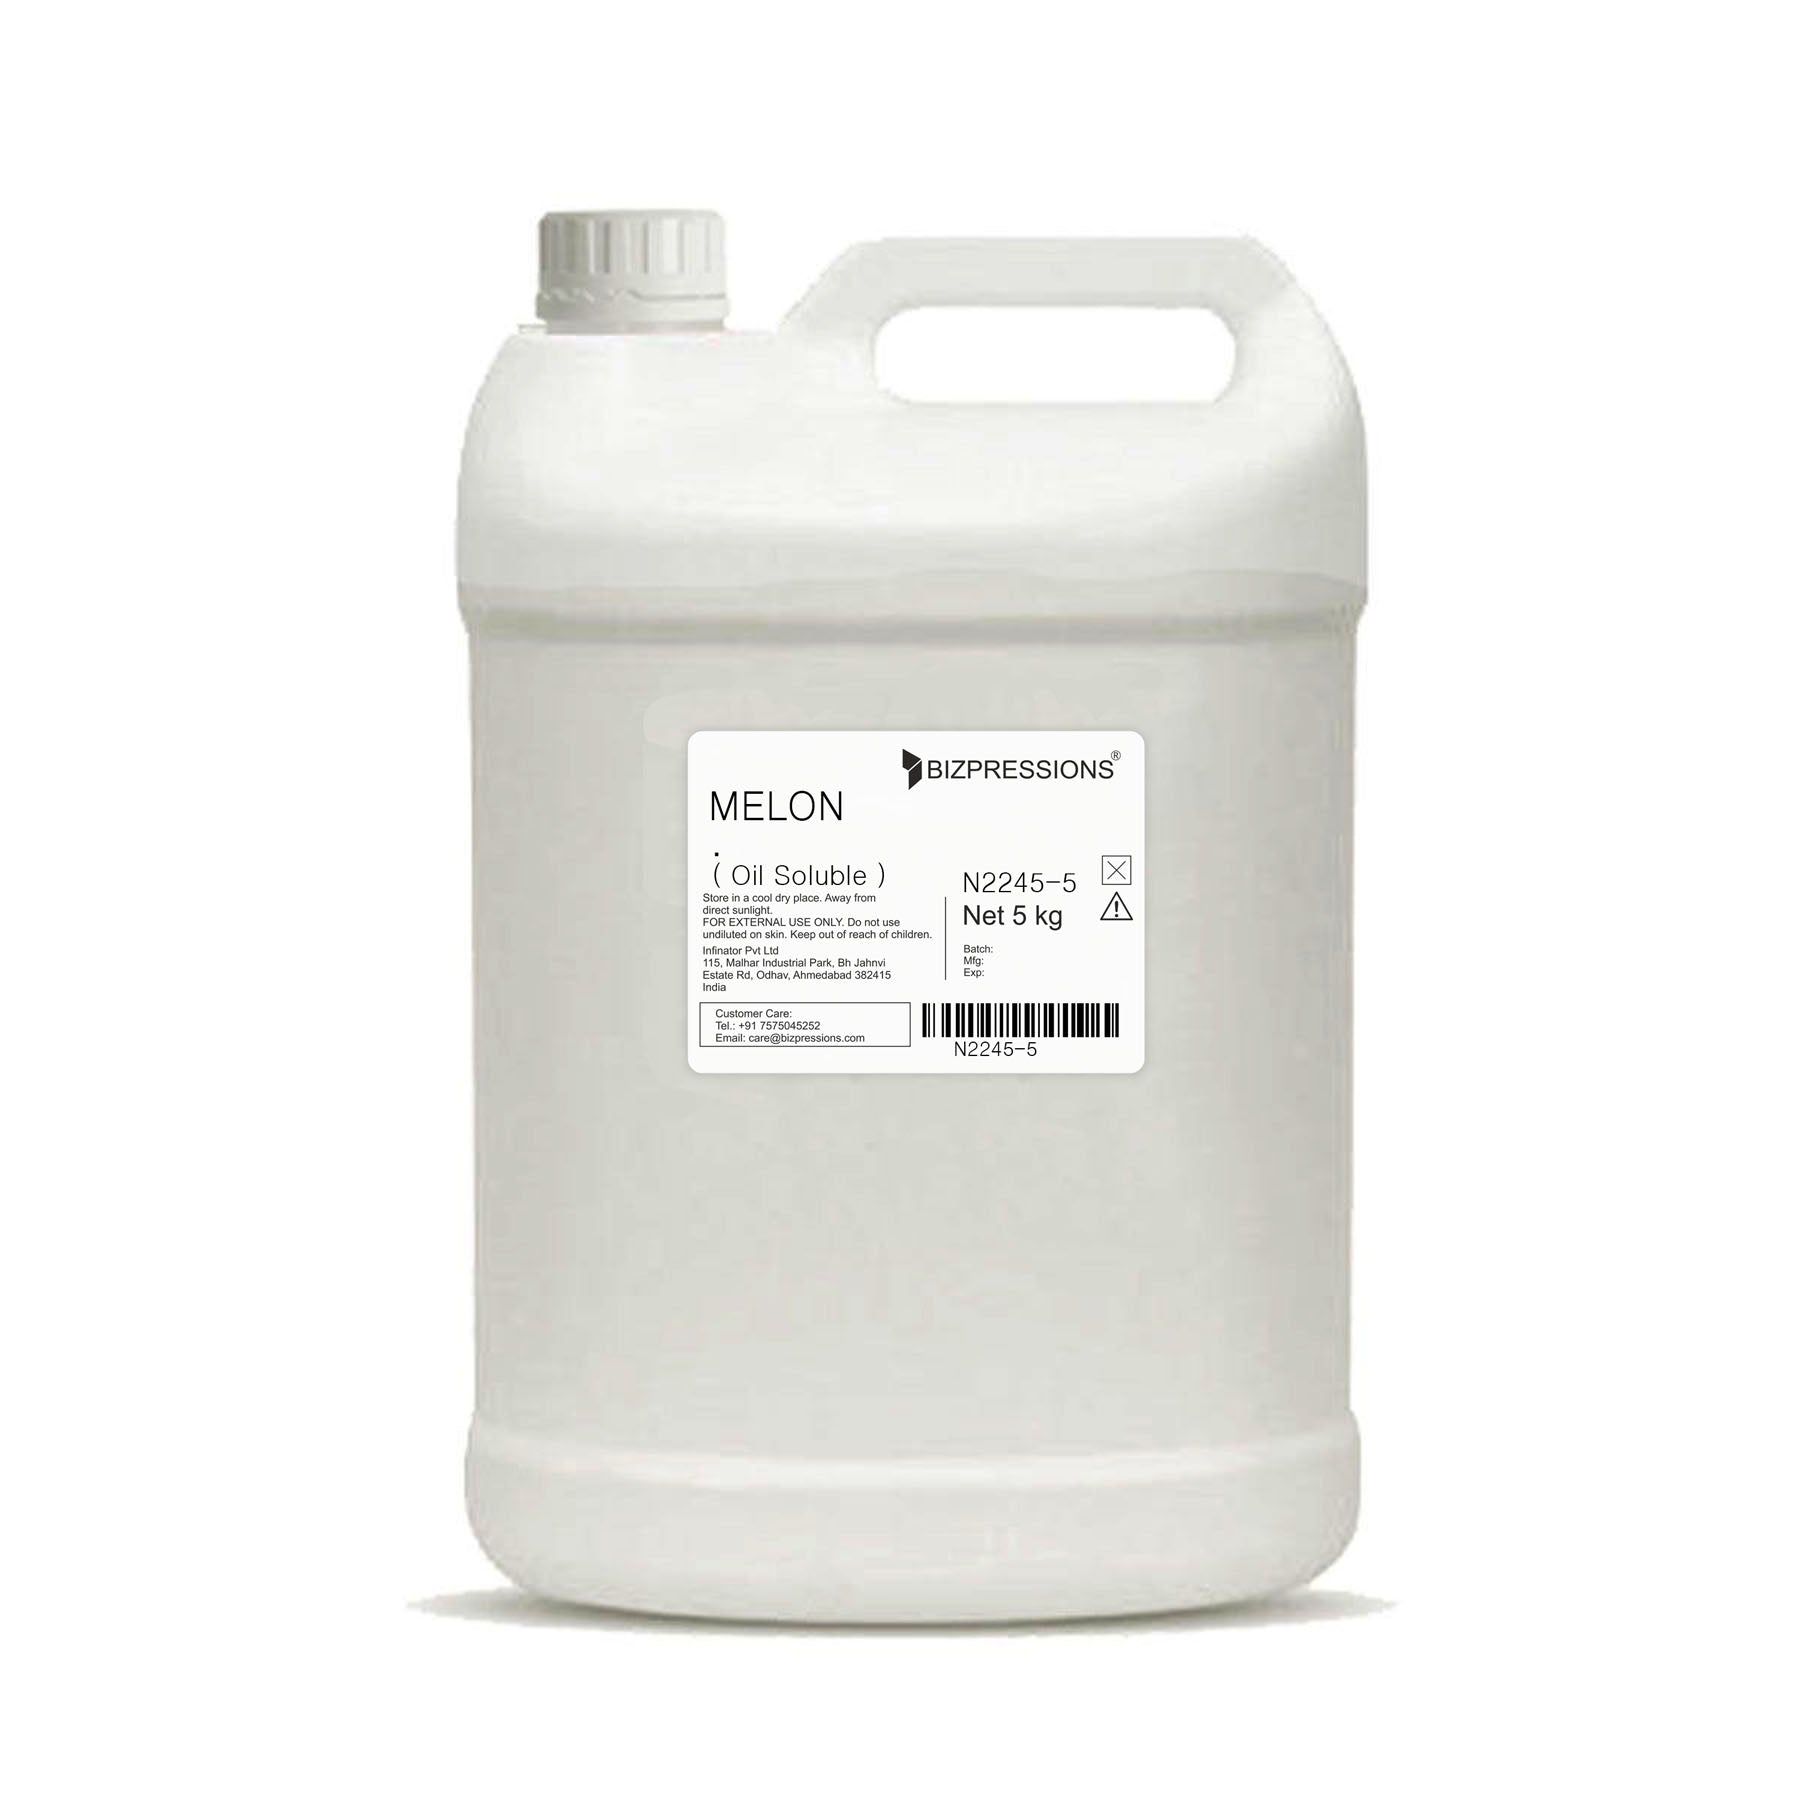 MELON - Fragrance ( Oil Soluble ) - 5 kg